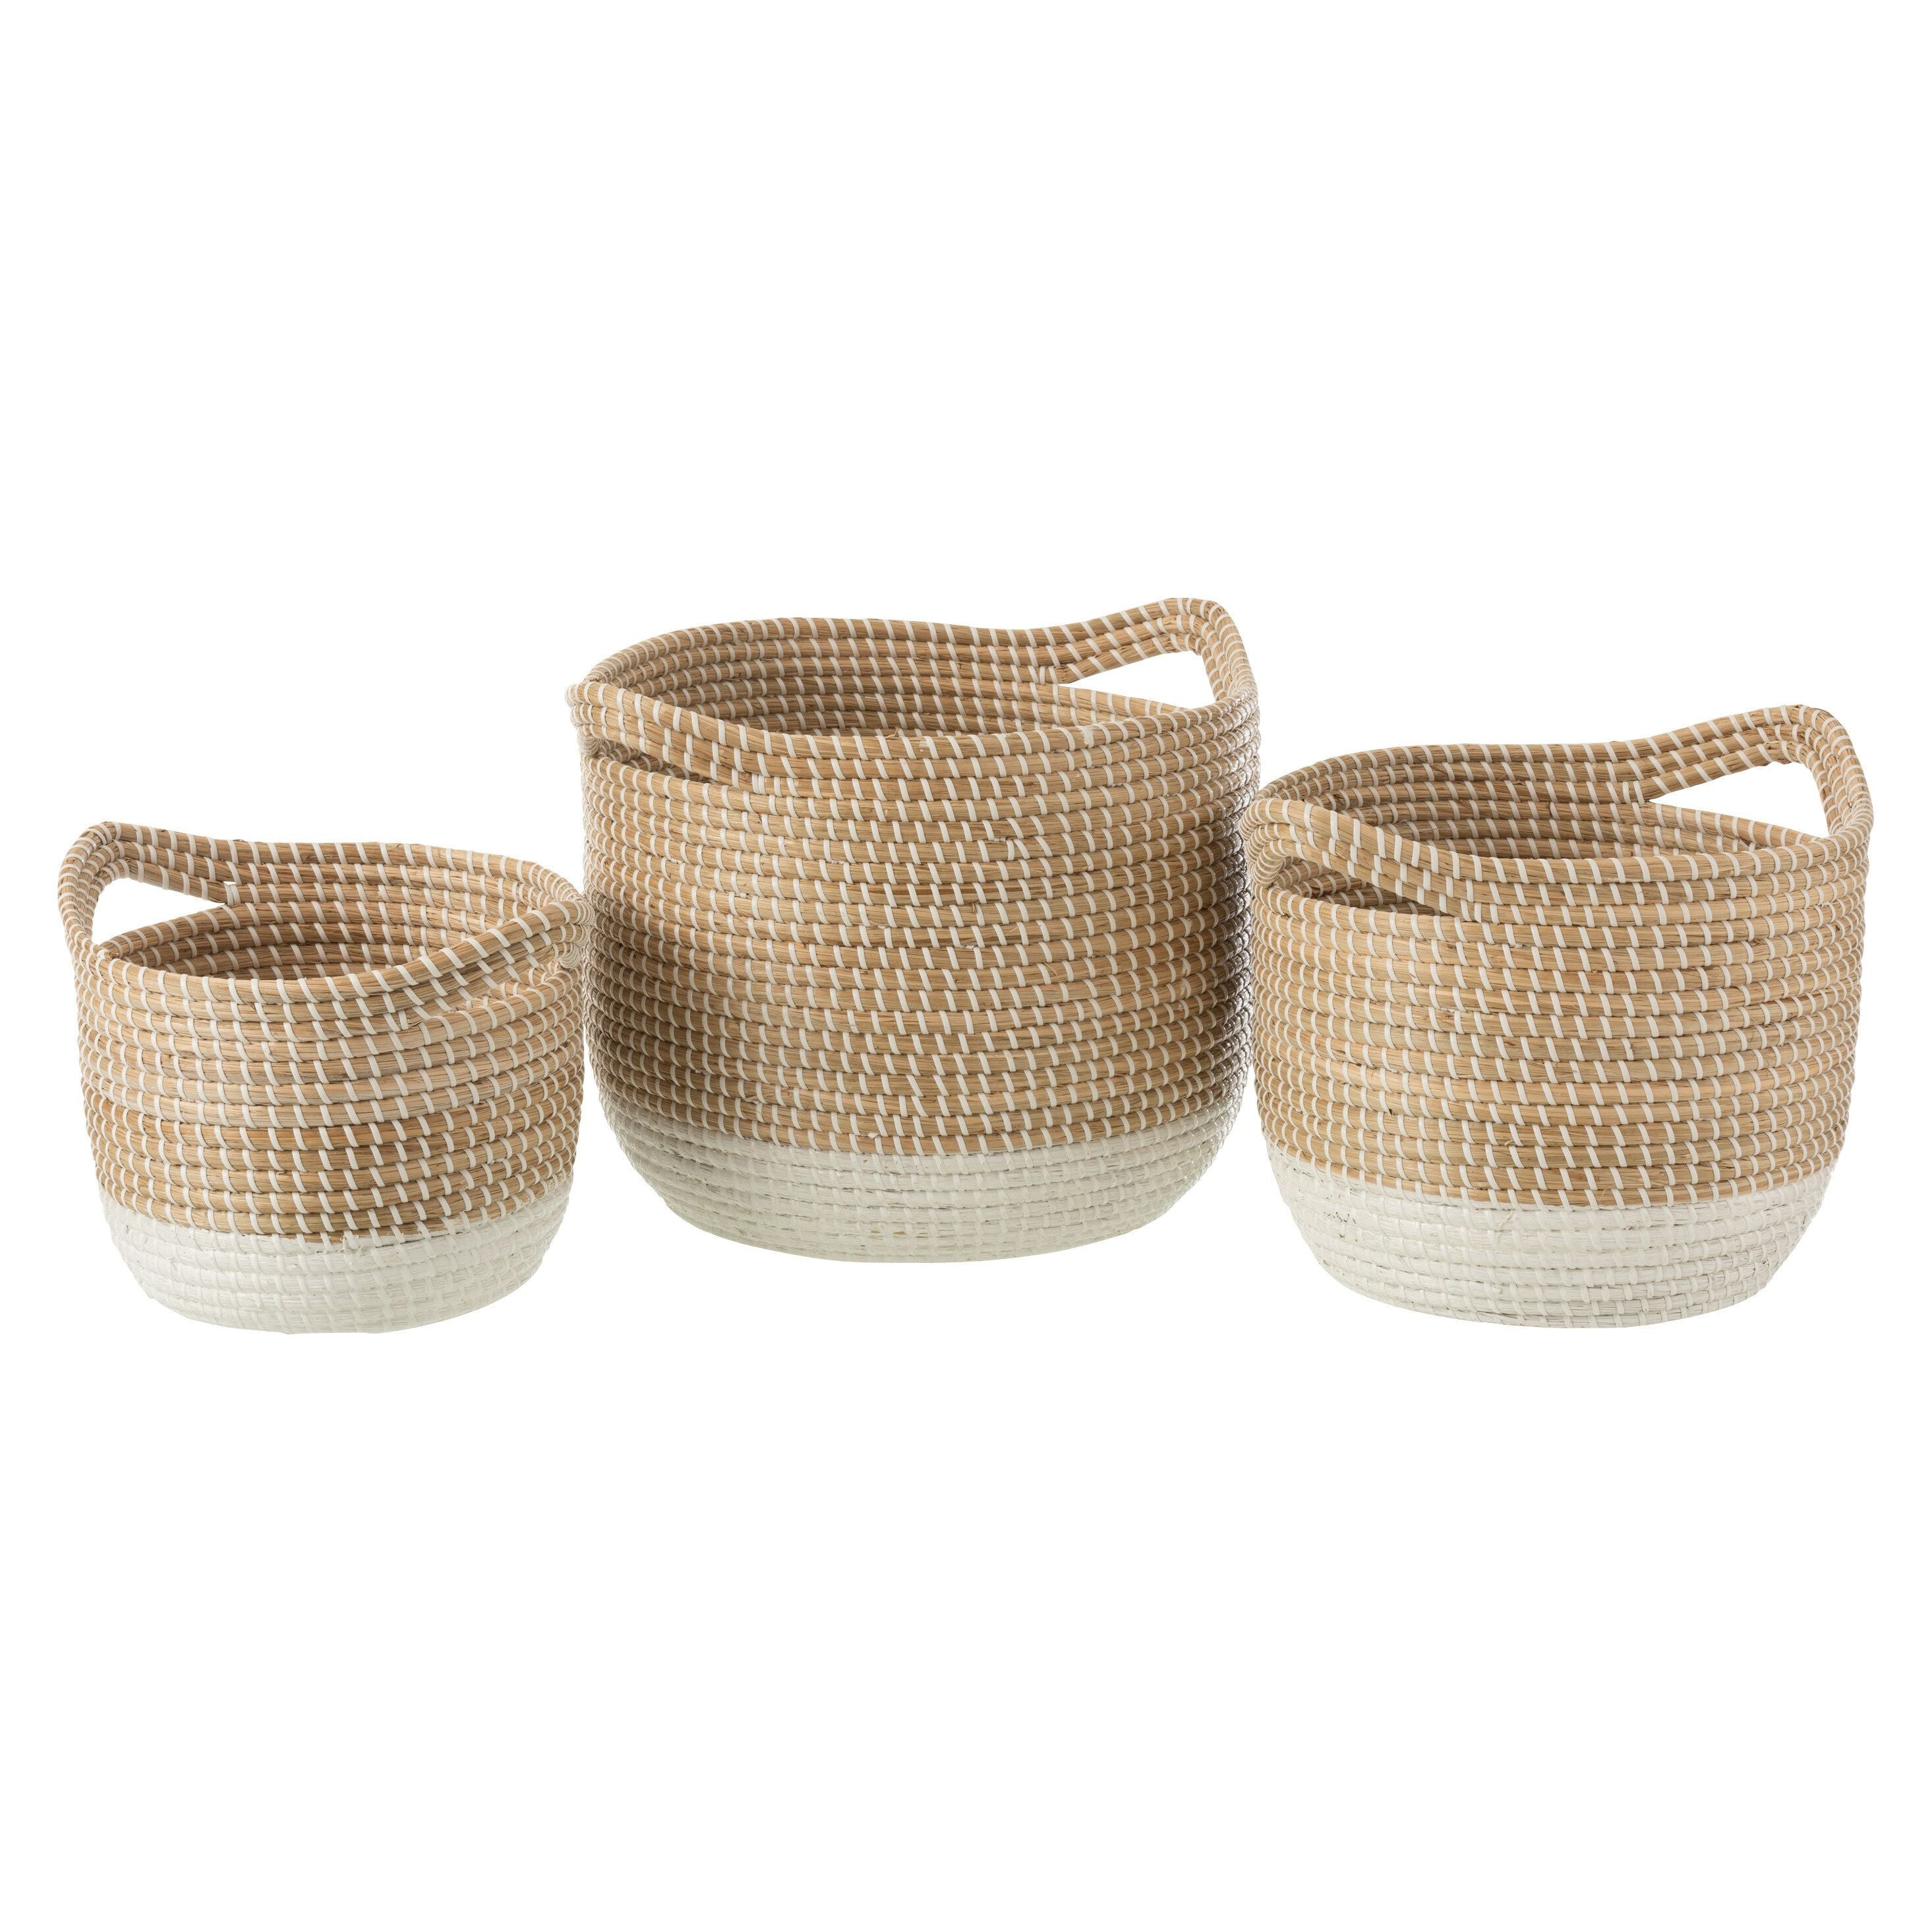 Baskets Round Seagrass Natural/white